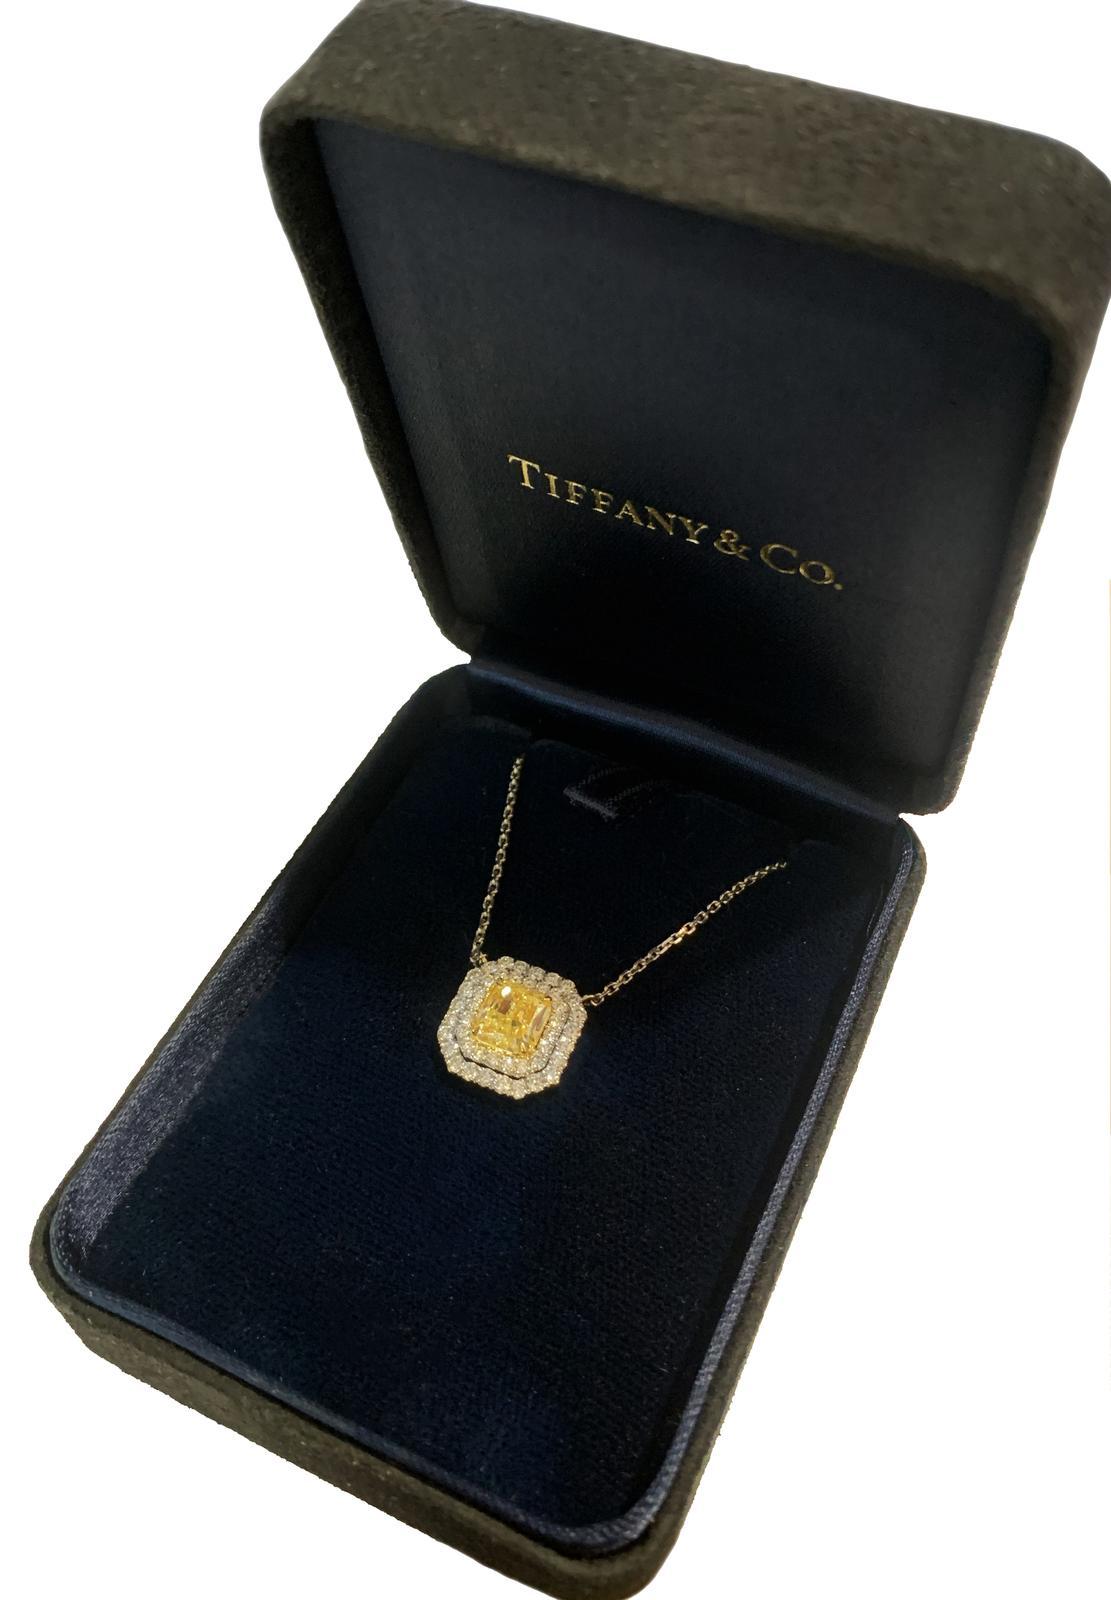 -Mint condition
-Platinum
-Length: 16”
-Pendant dimension: 12x12mm
-Center Fancy Yellow Diamond: 0.87ct, Cushion Modified Cut
-Diamonds: 0.76ct, VS clarity, E-F color
-Retail: $22,000